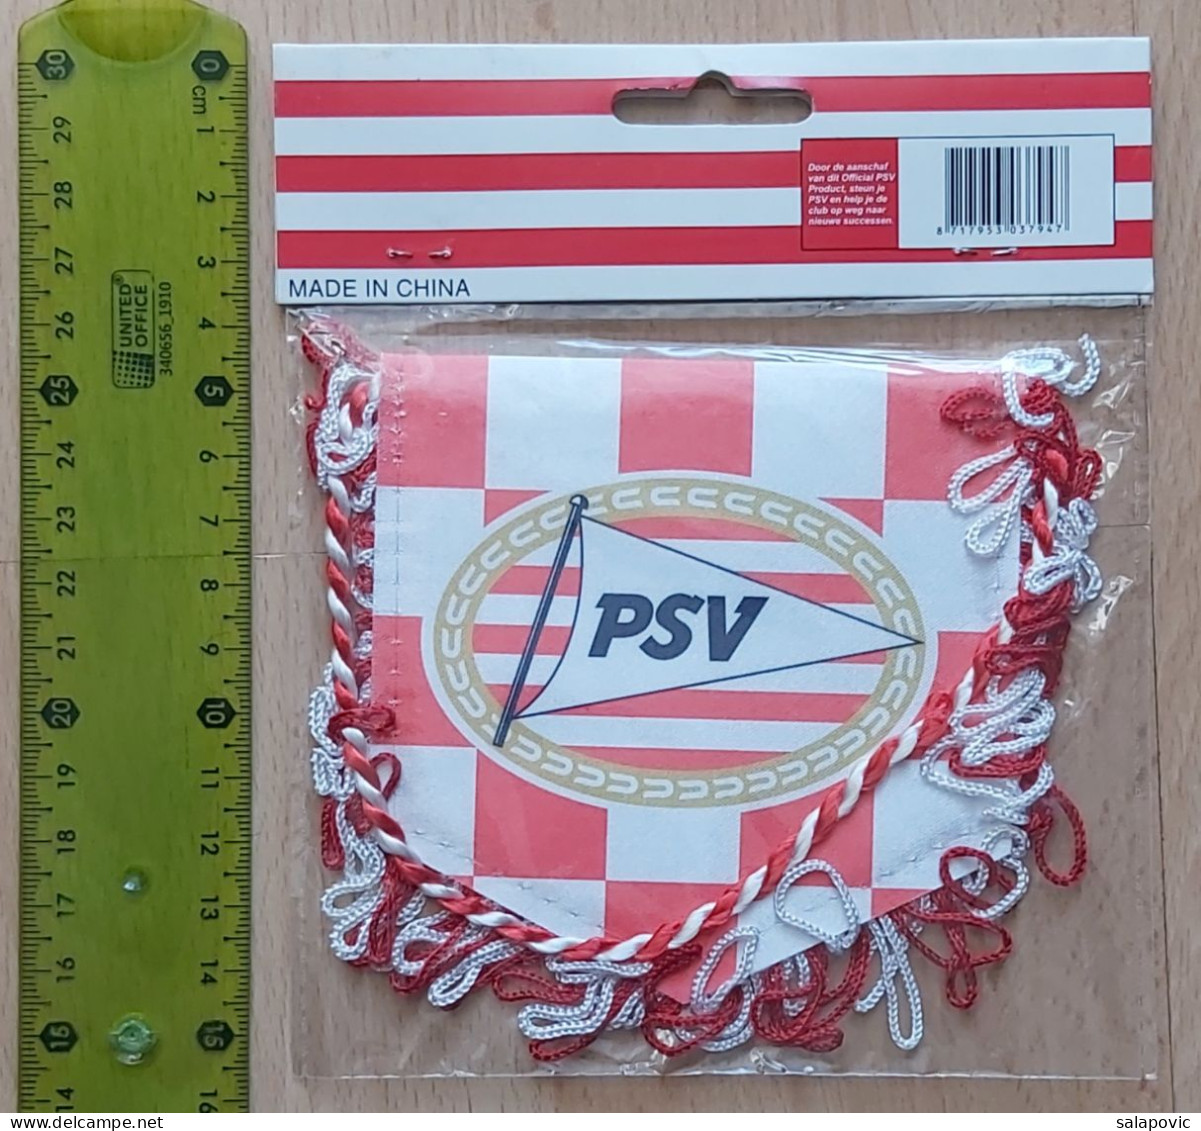 PSV Eindhoven Netherlands Football Club SOCCER, FUTBOL, CALCIO PENNANT, SPORTS FLAG ZS 3/18 - Bekleidung, Souvenirs Und Sonstige